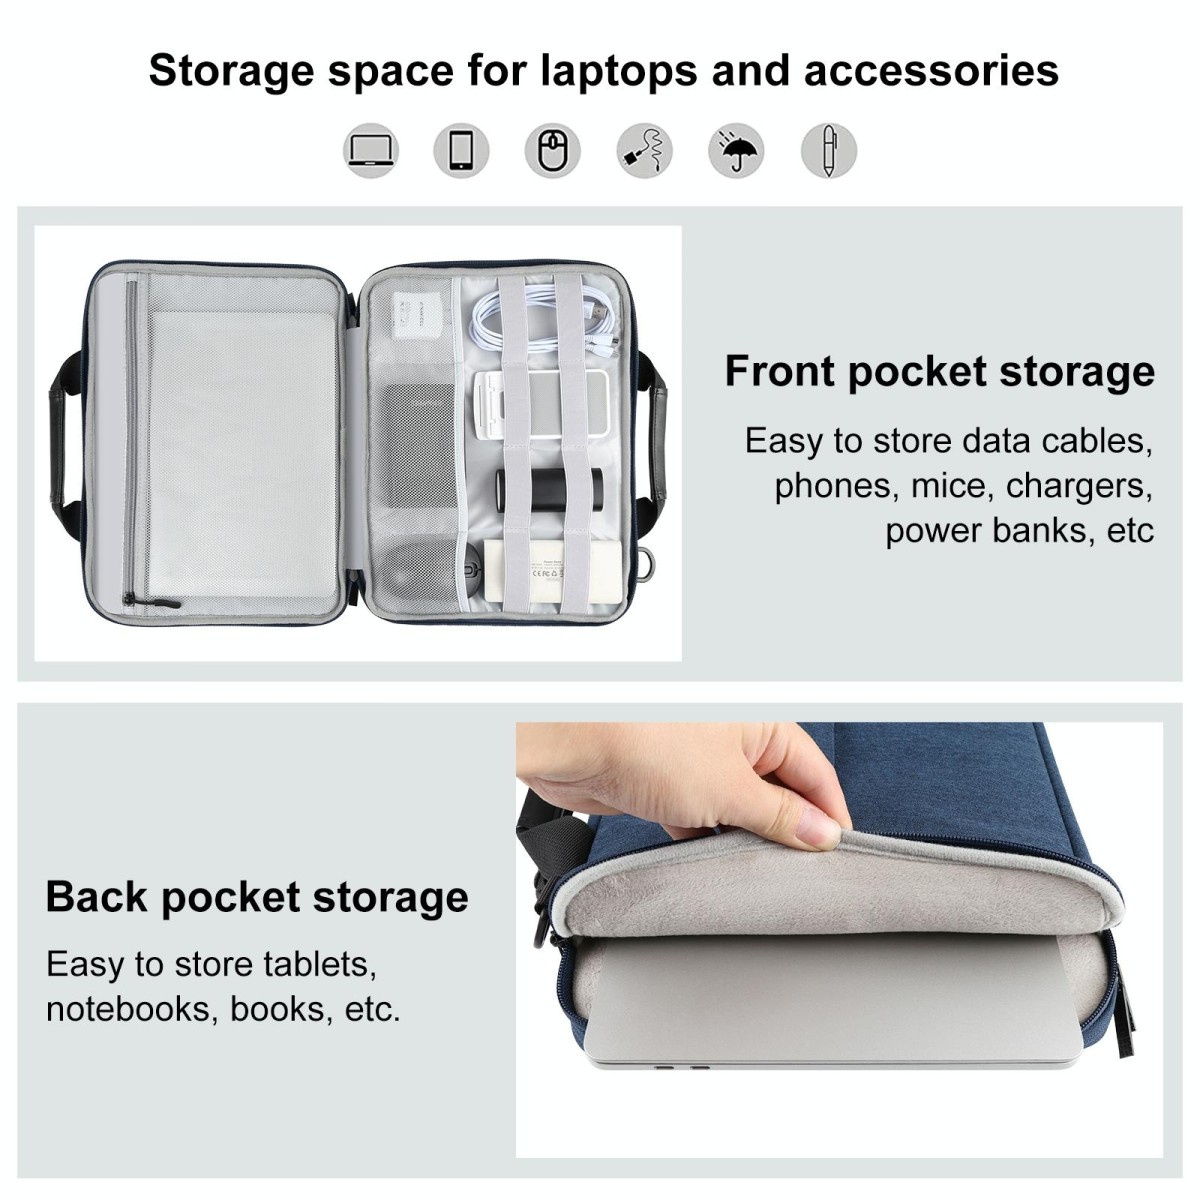 HAWEEL 13.0 inch-14.0 inch Briefcase Crossbody Laptop Bag For Macbook, Lenovo Thinkpad, ASUS, HP(Navy Blue)